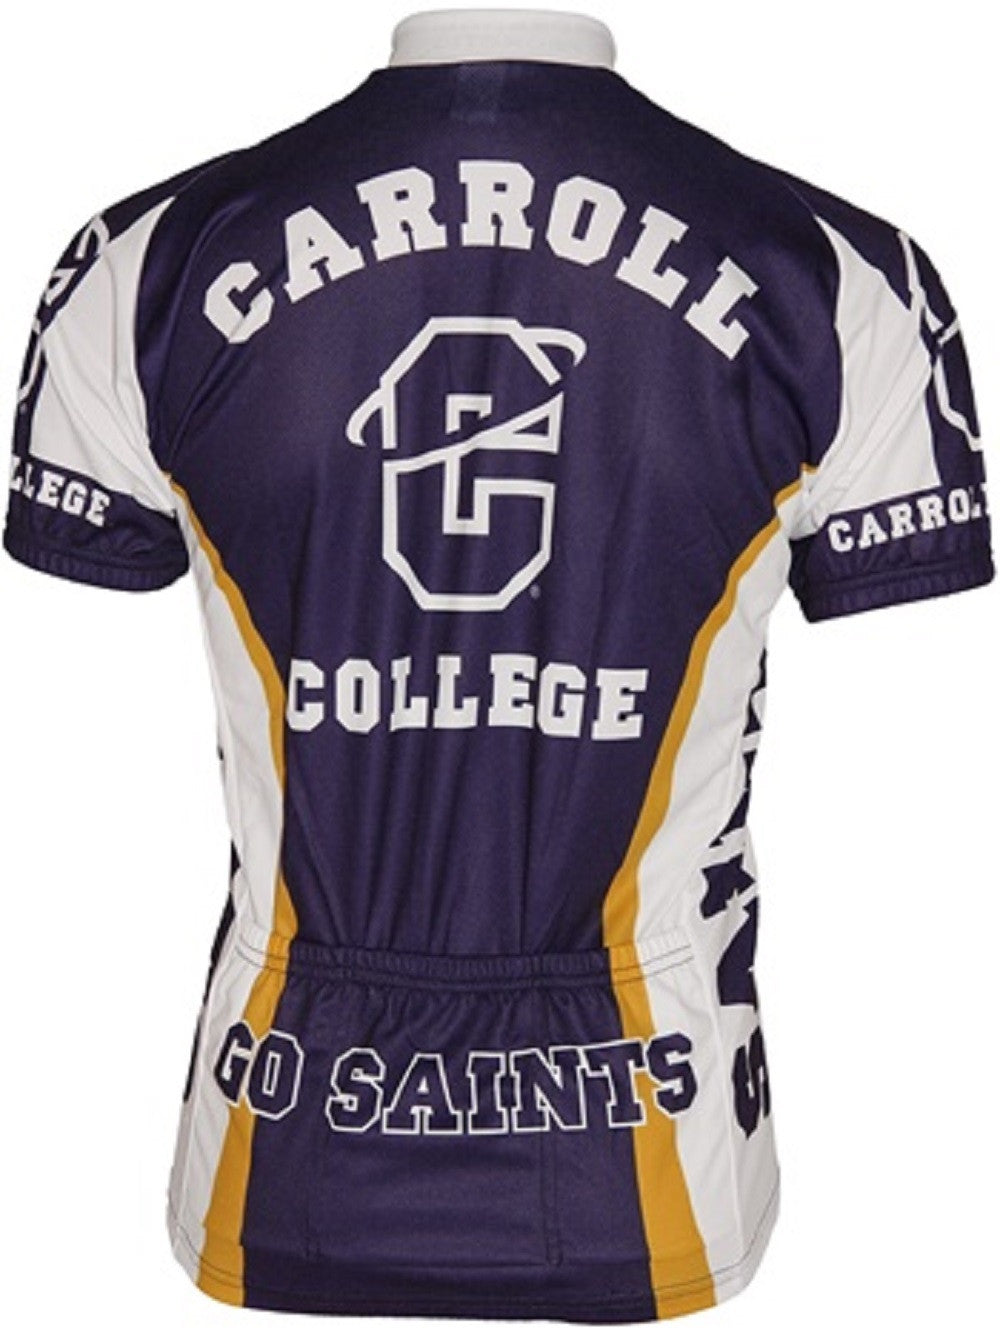 Carroll College Men's Cycling Jersey (S, 3XL)